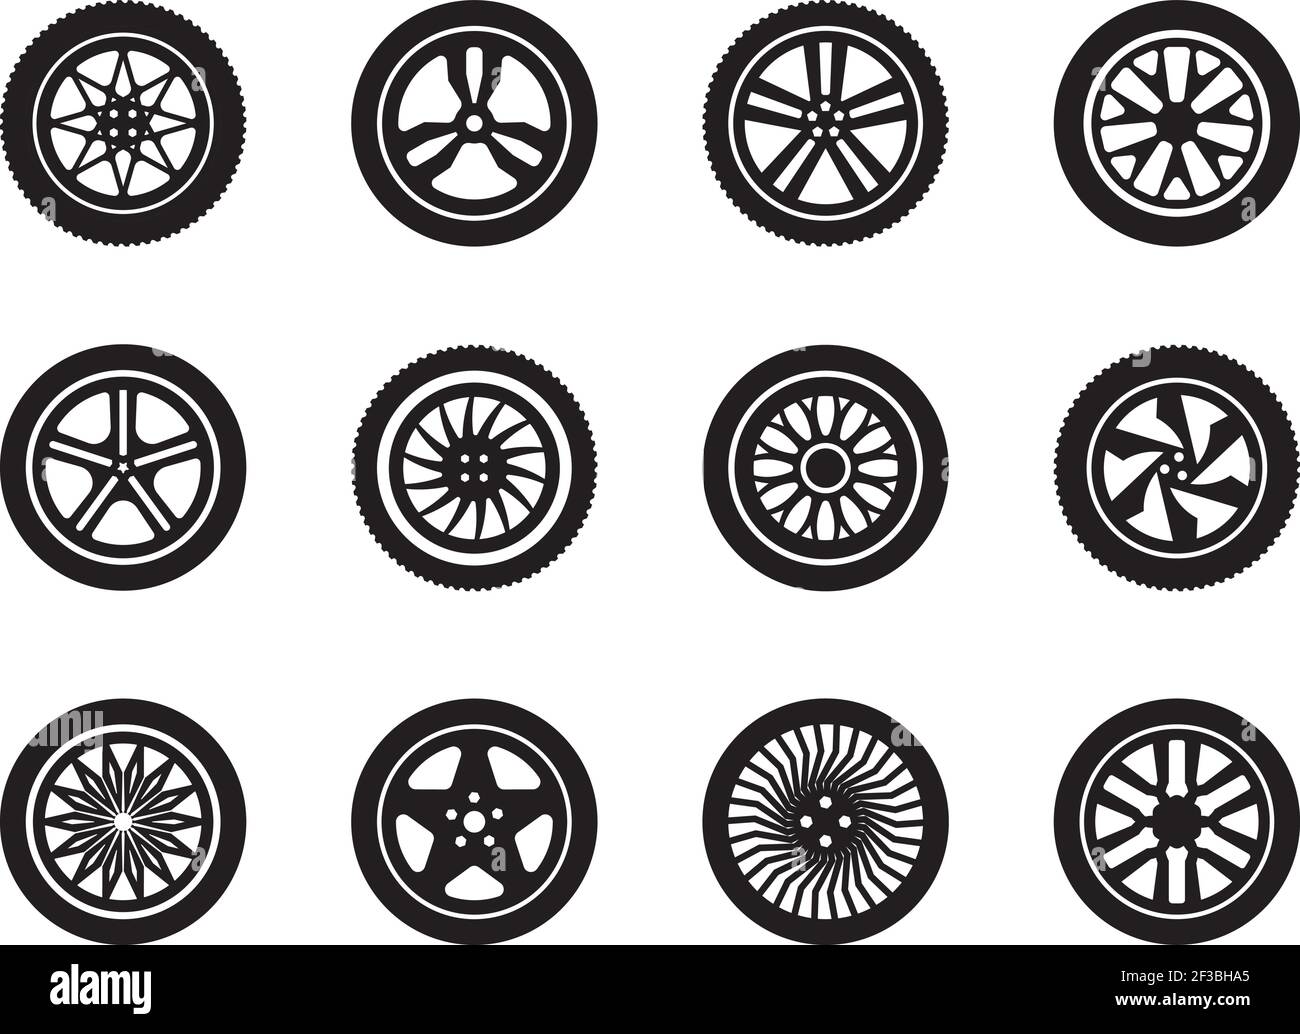 Räder Auto. Reifen Formen Transport Räder Silhouetten Vektor Fahrzeug Symbole Sammlung Stock Vektor